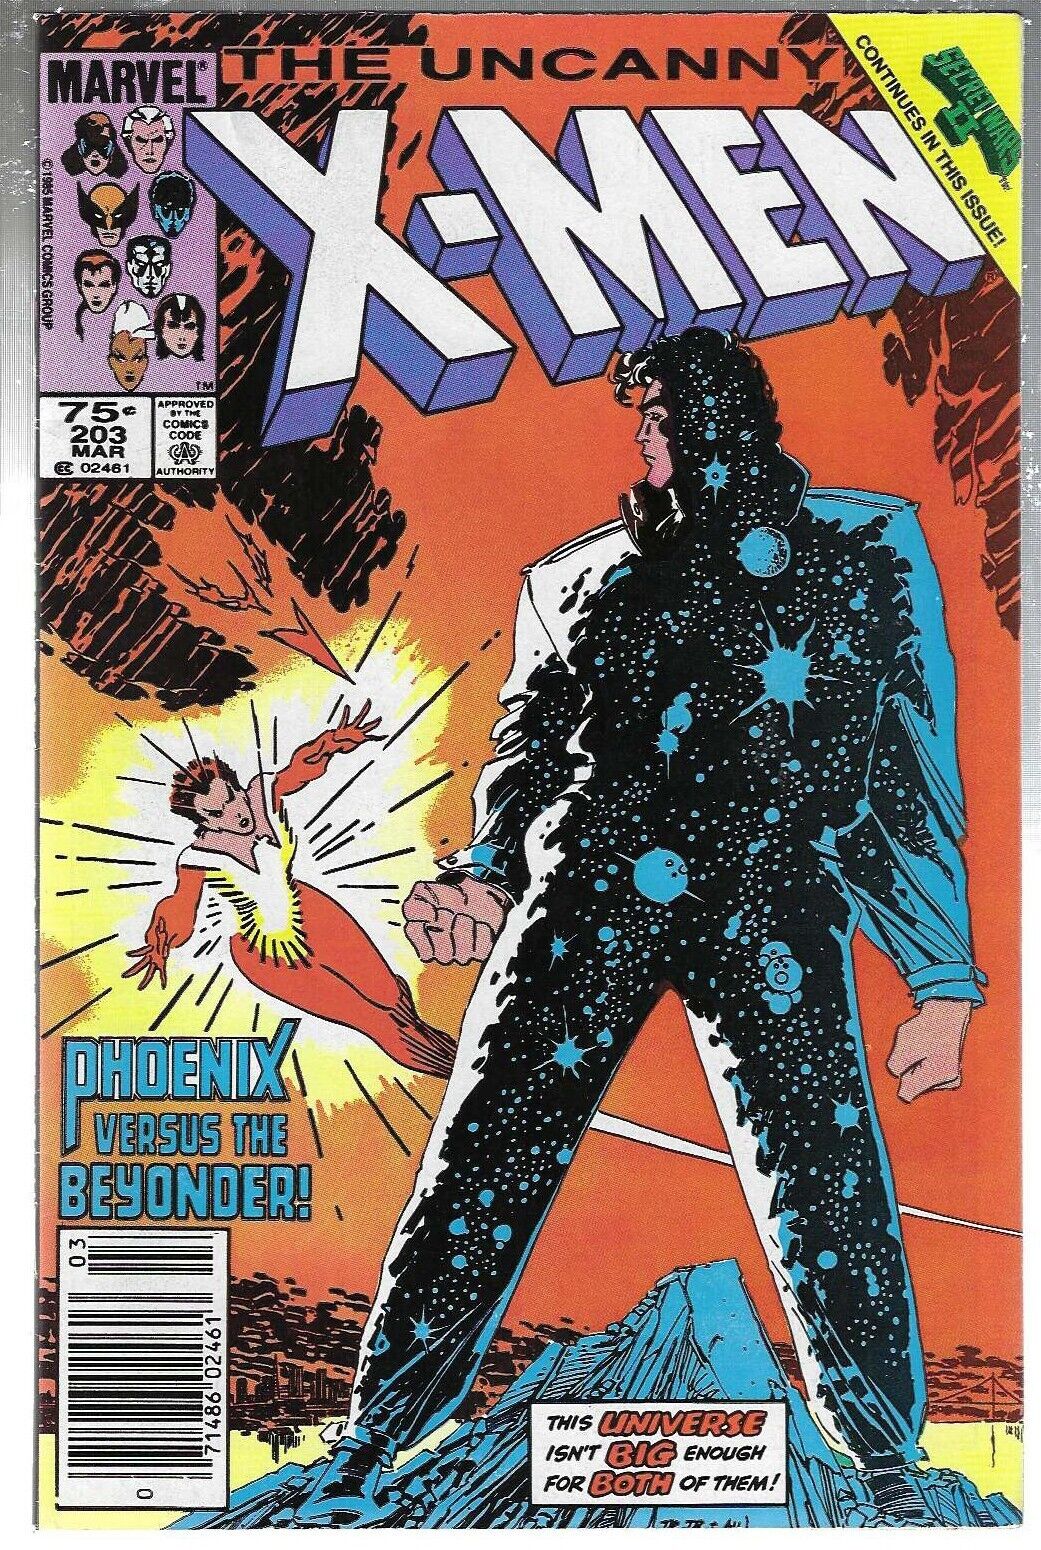 UNCANNY X-MEN #203 MARVEL COMICS 1985 NEWSSTAND VF/NM WHITE PAGES CGC IT